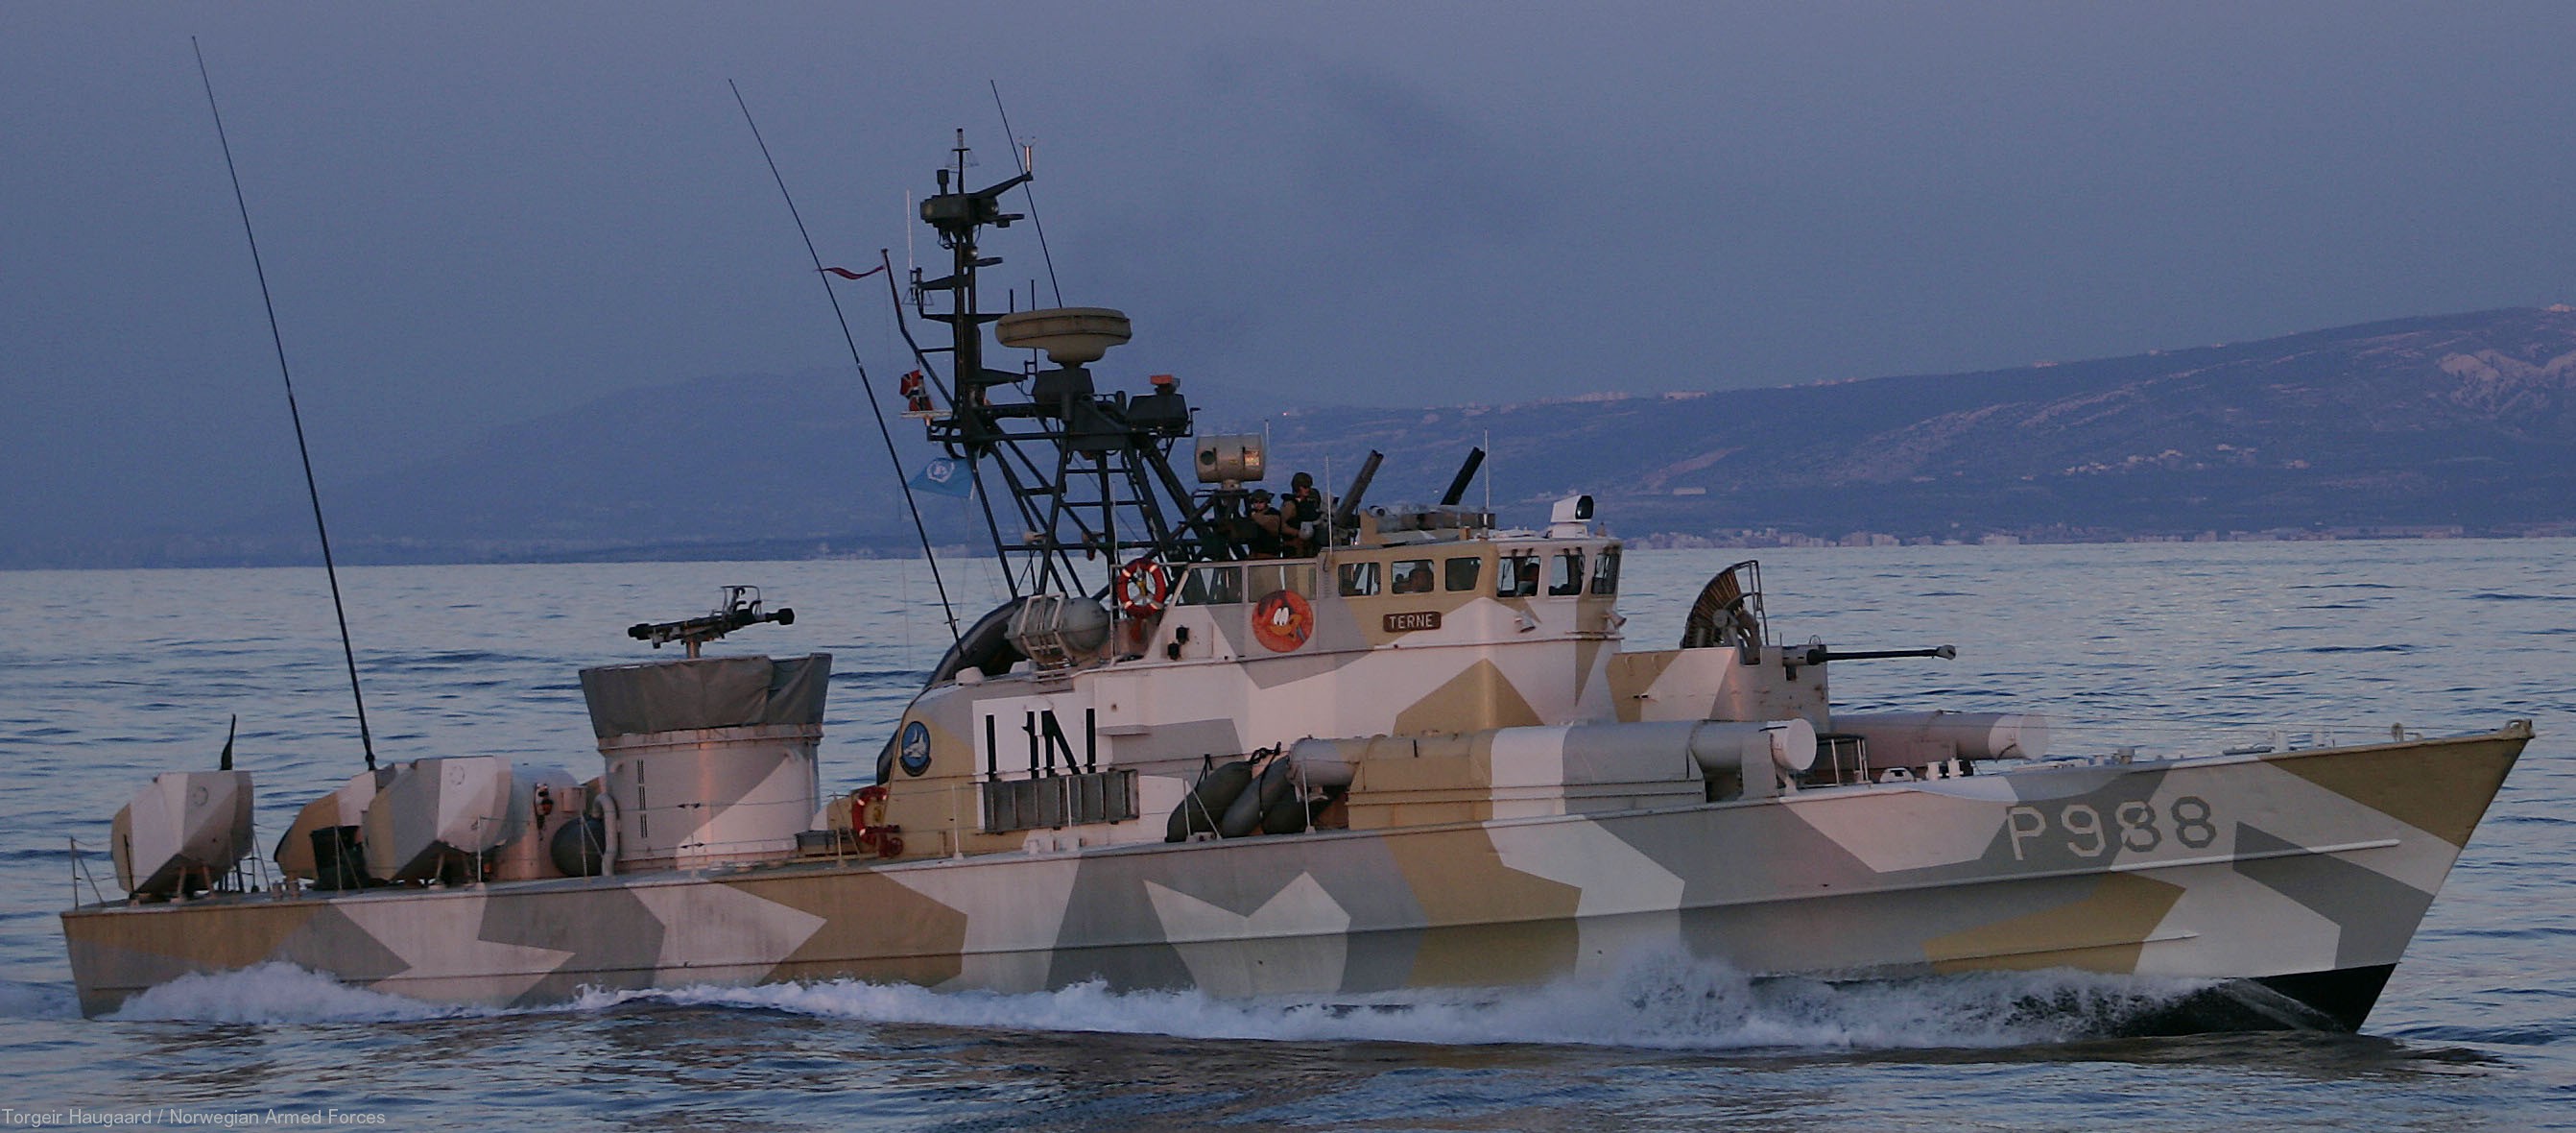 p-988 knm terne hauk class fast attack missile torpedo craft boat norwegian navy sjøforsvaret 11